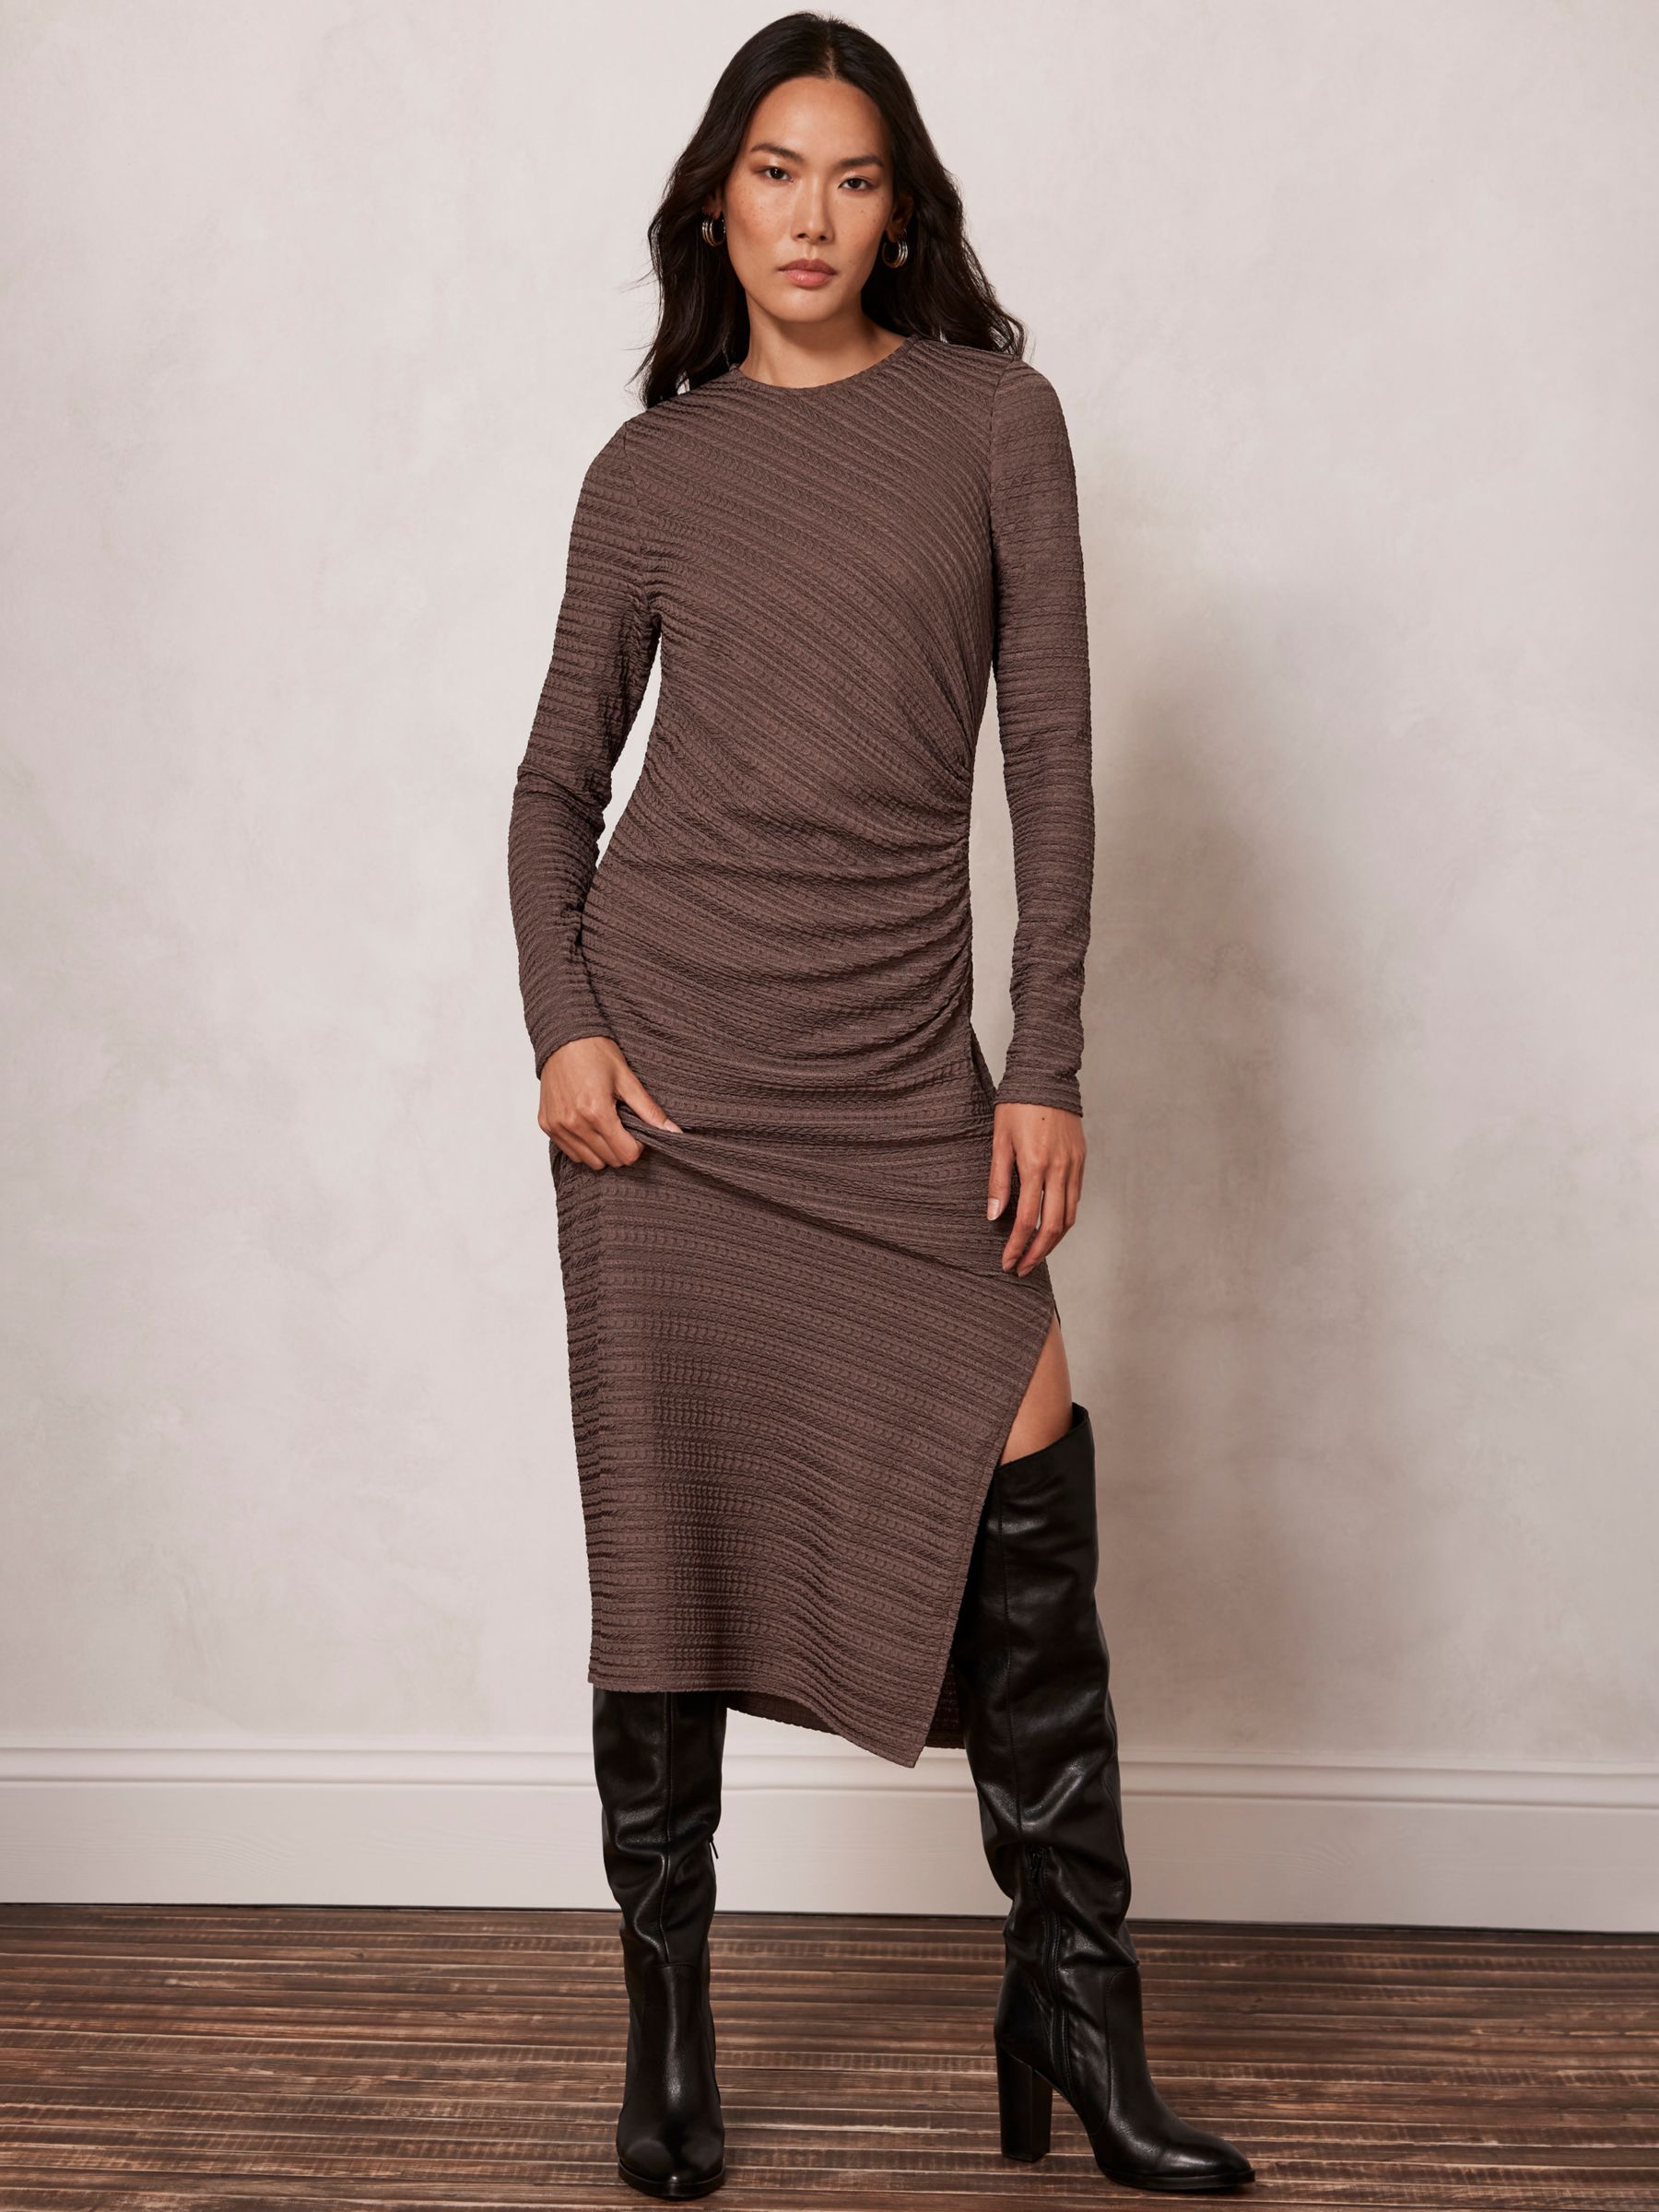 Buy Mint Velvet Textured Midi Dress, Dark Brown Online at johnlewis.com